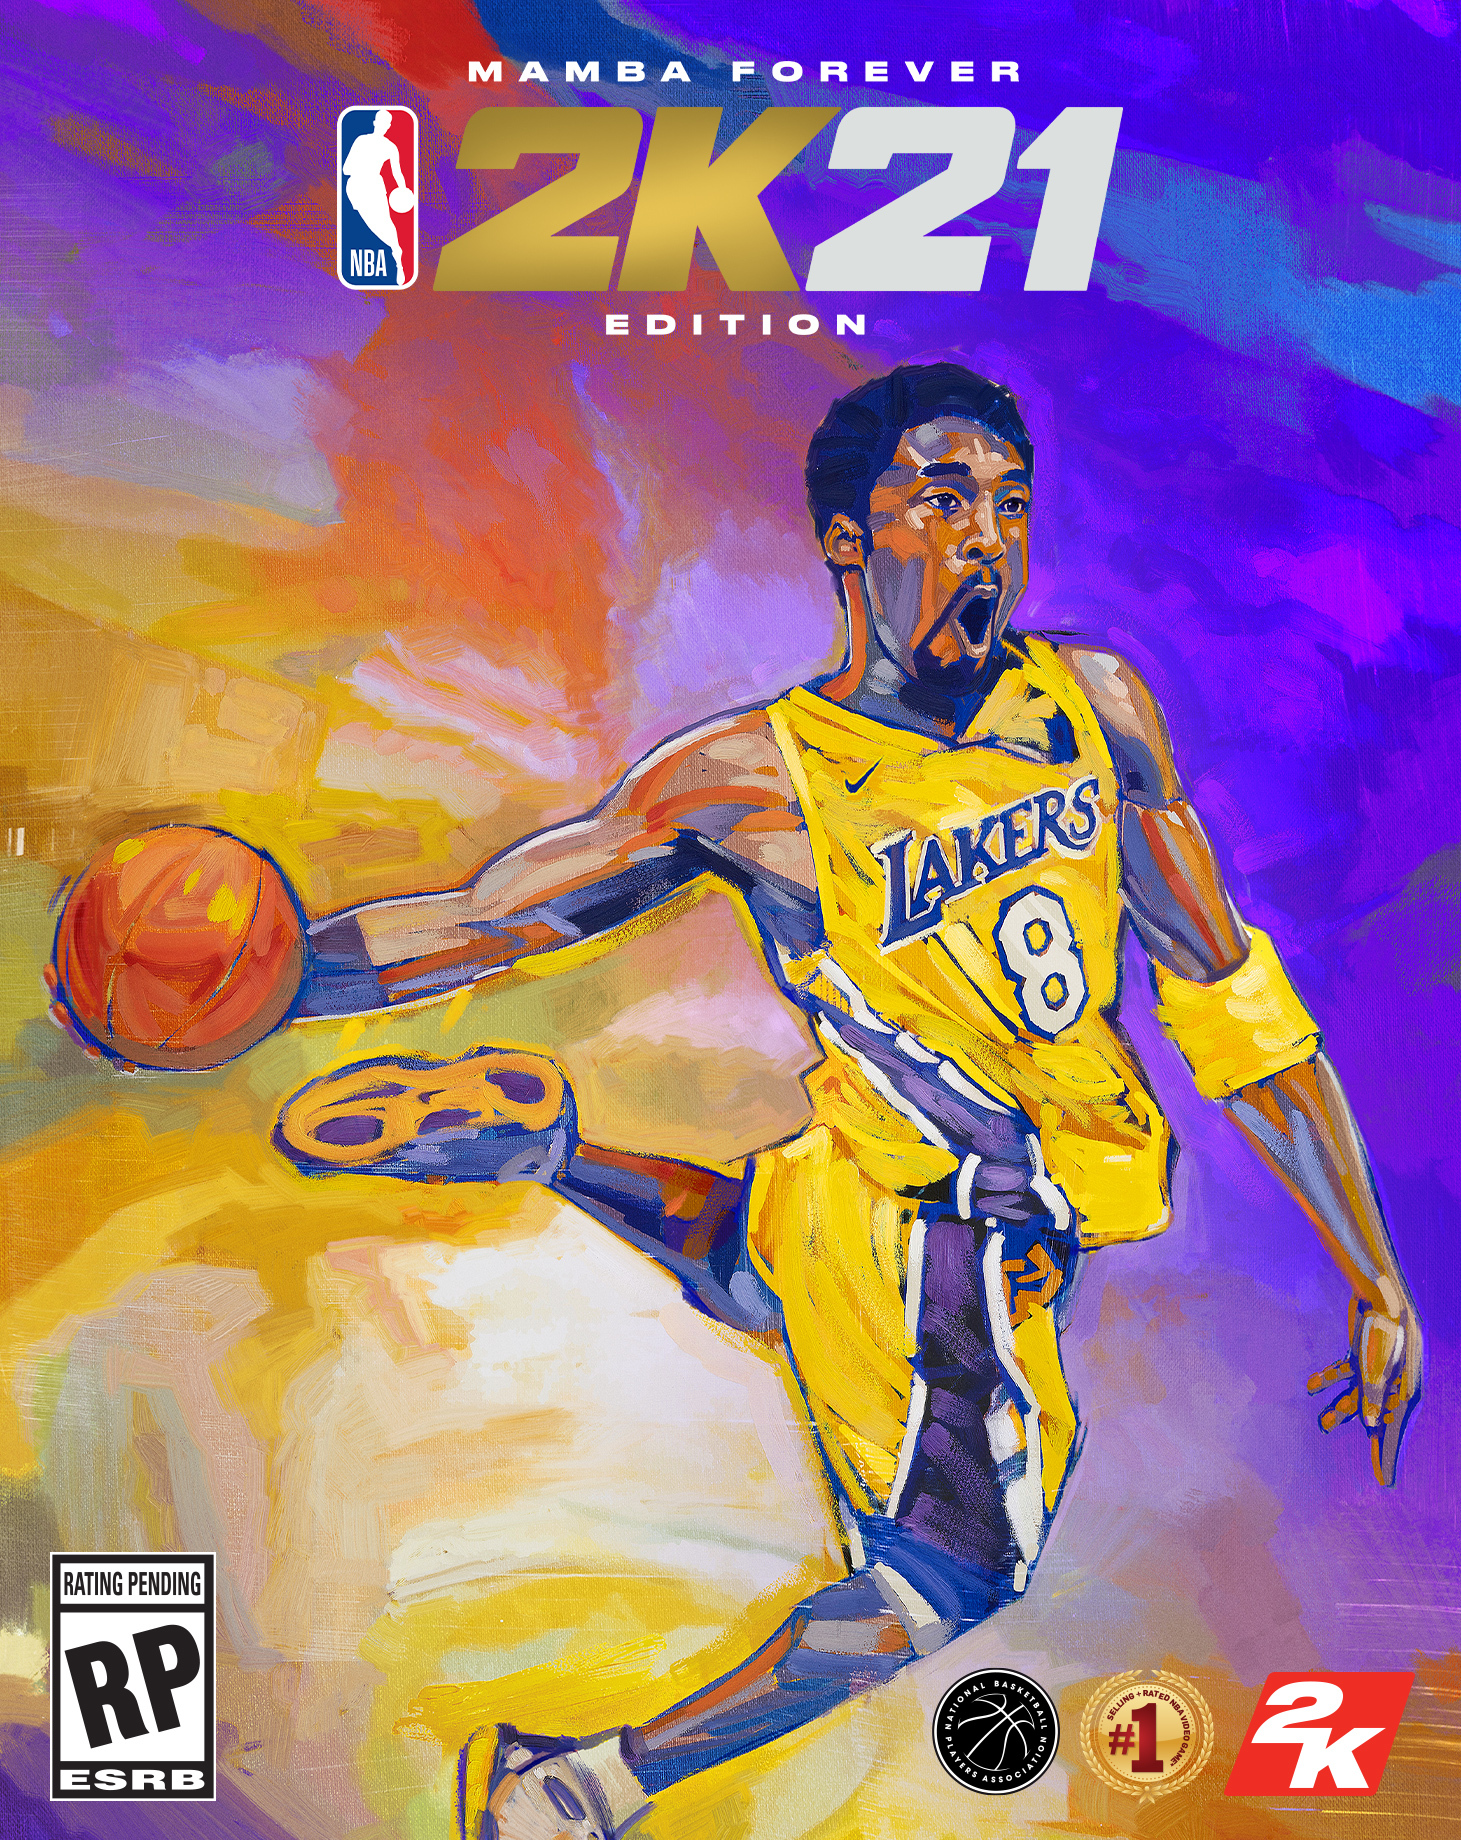 Kobe Bryant receives NBA 2K21 cover athlete status